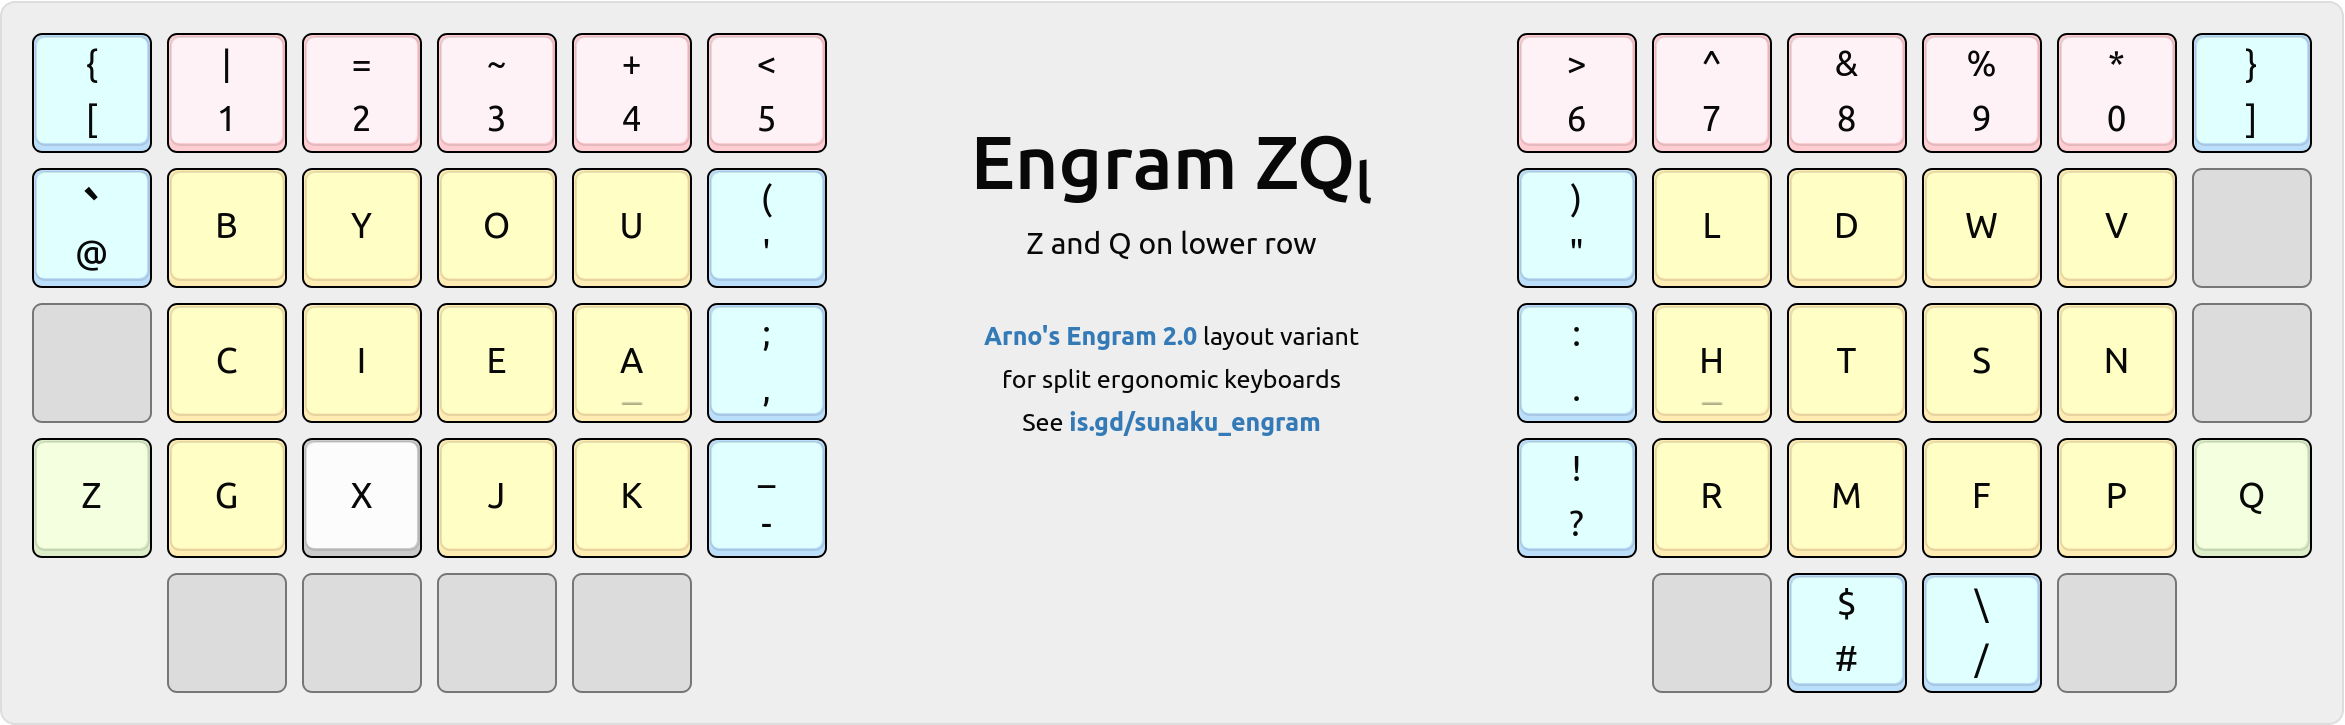 Engram-ZQl variant